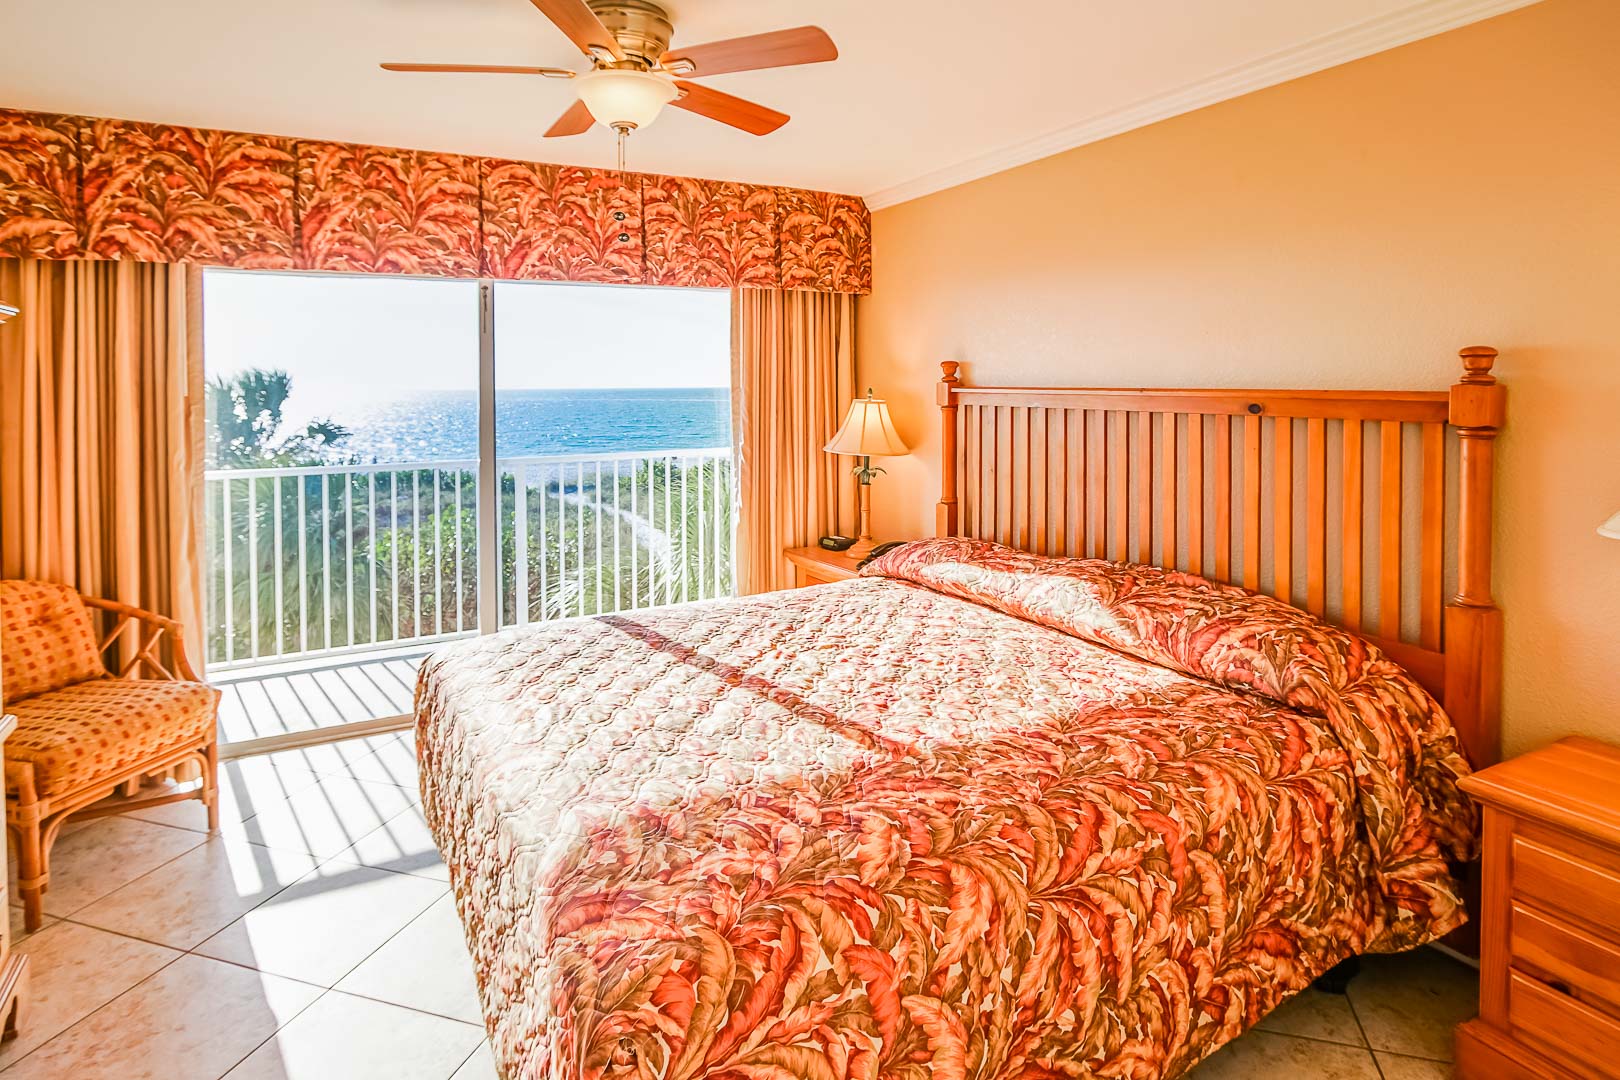 A vibrant bedroom at VRI's Sand Pebble Resort in Treasure Island, Florida.